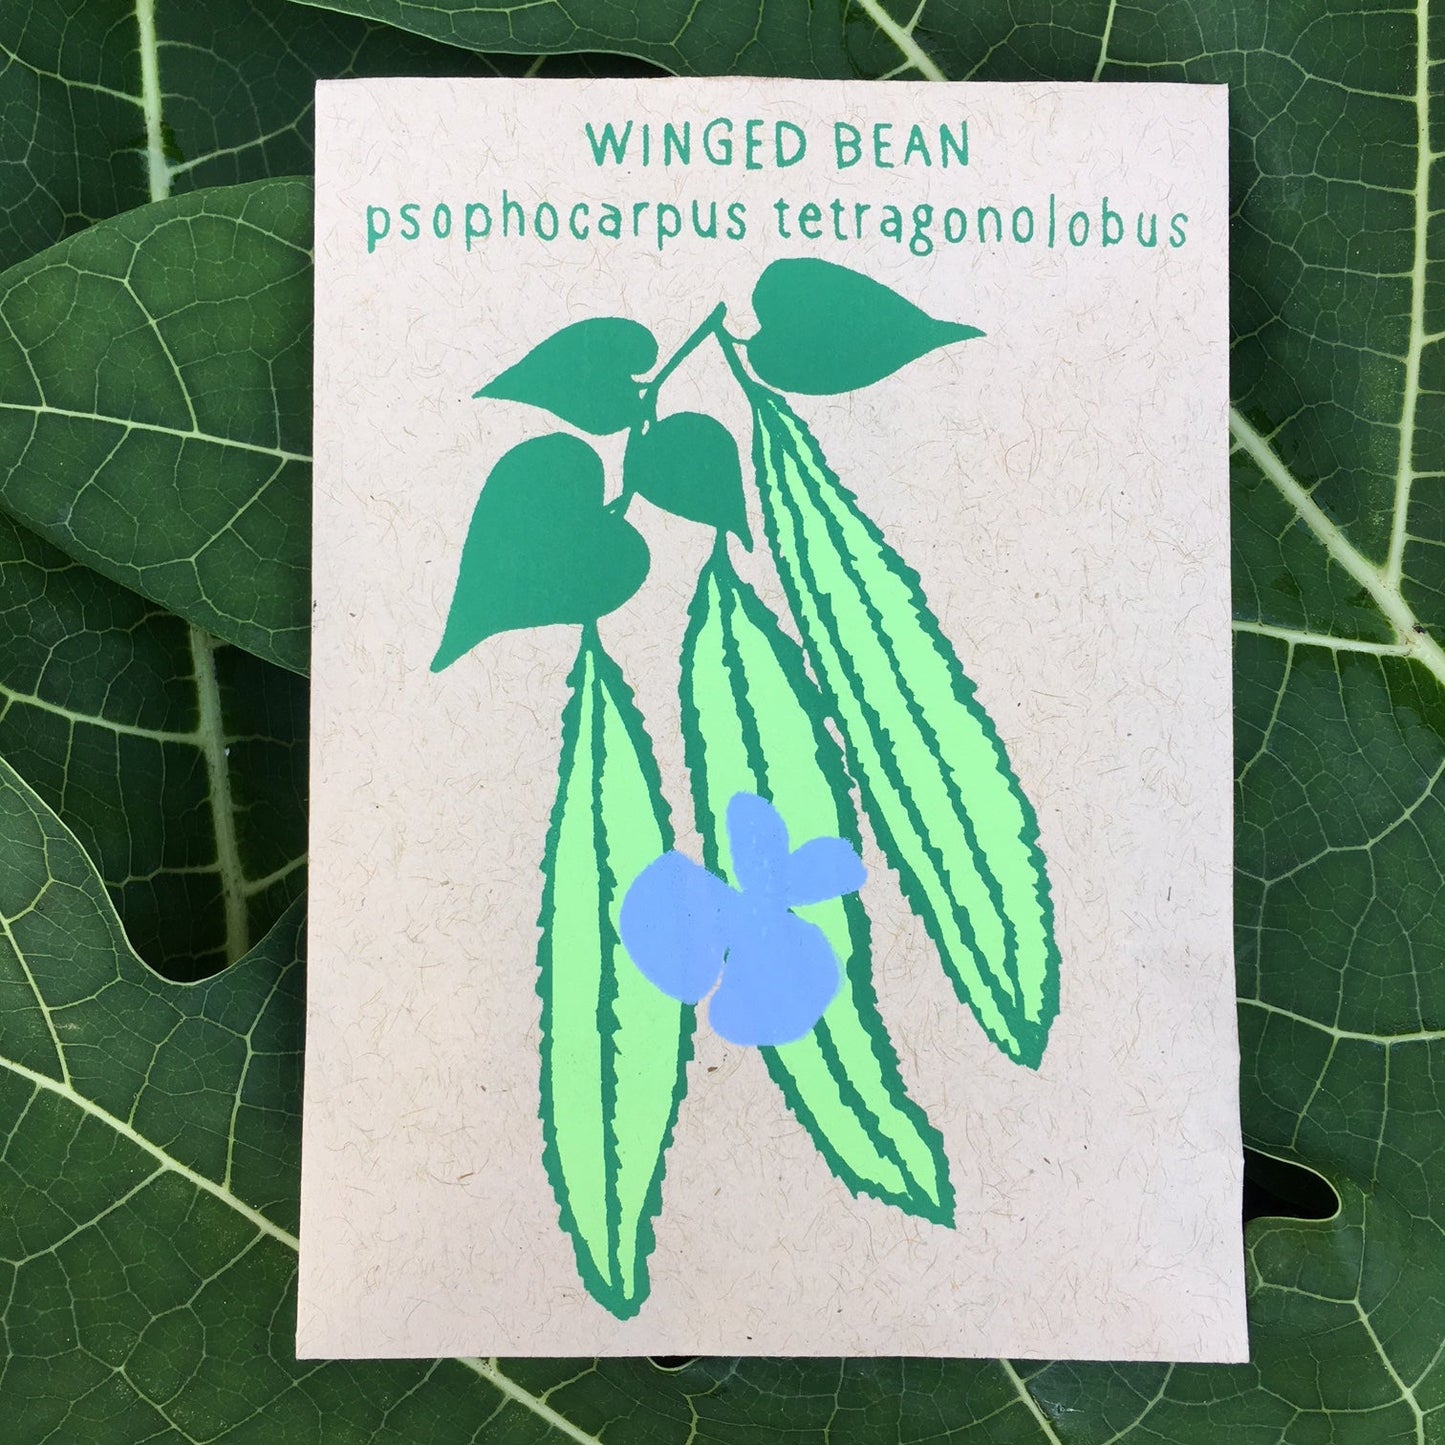 Winged Bean, Day Neutral (psophocarpus tetragonolobus) 20 seeds